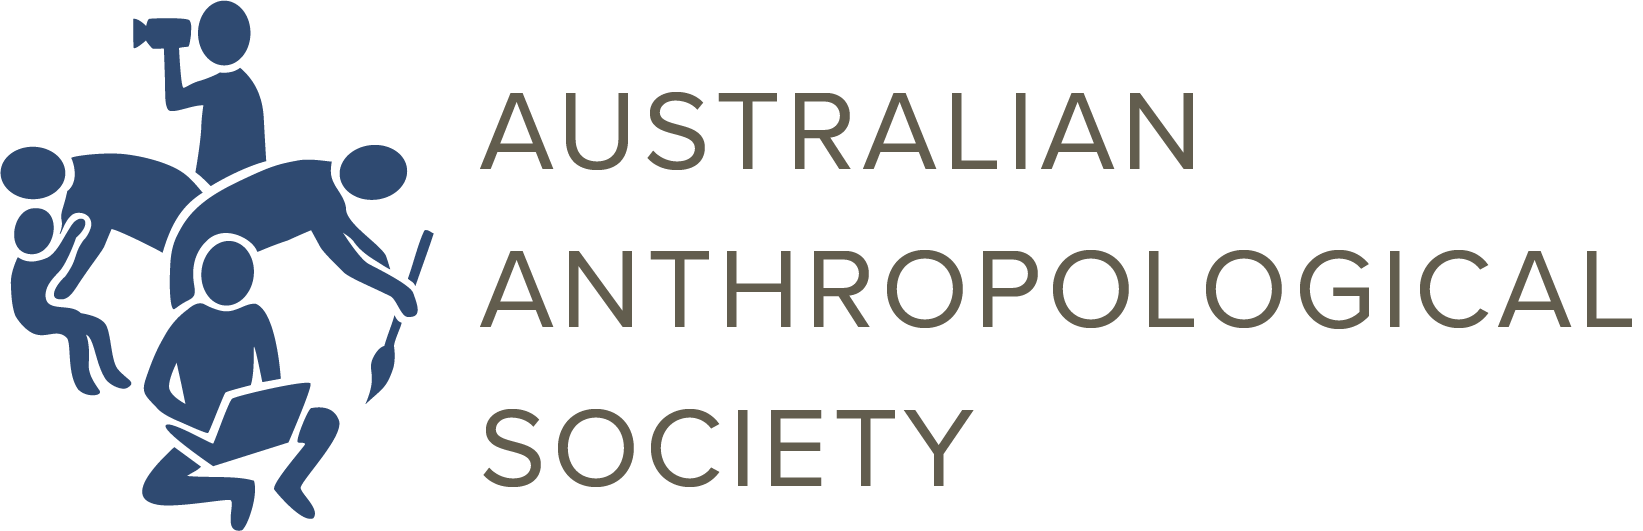 Australian Anthropological Society logo